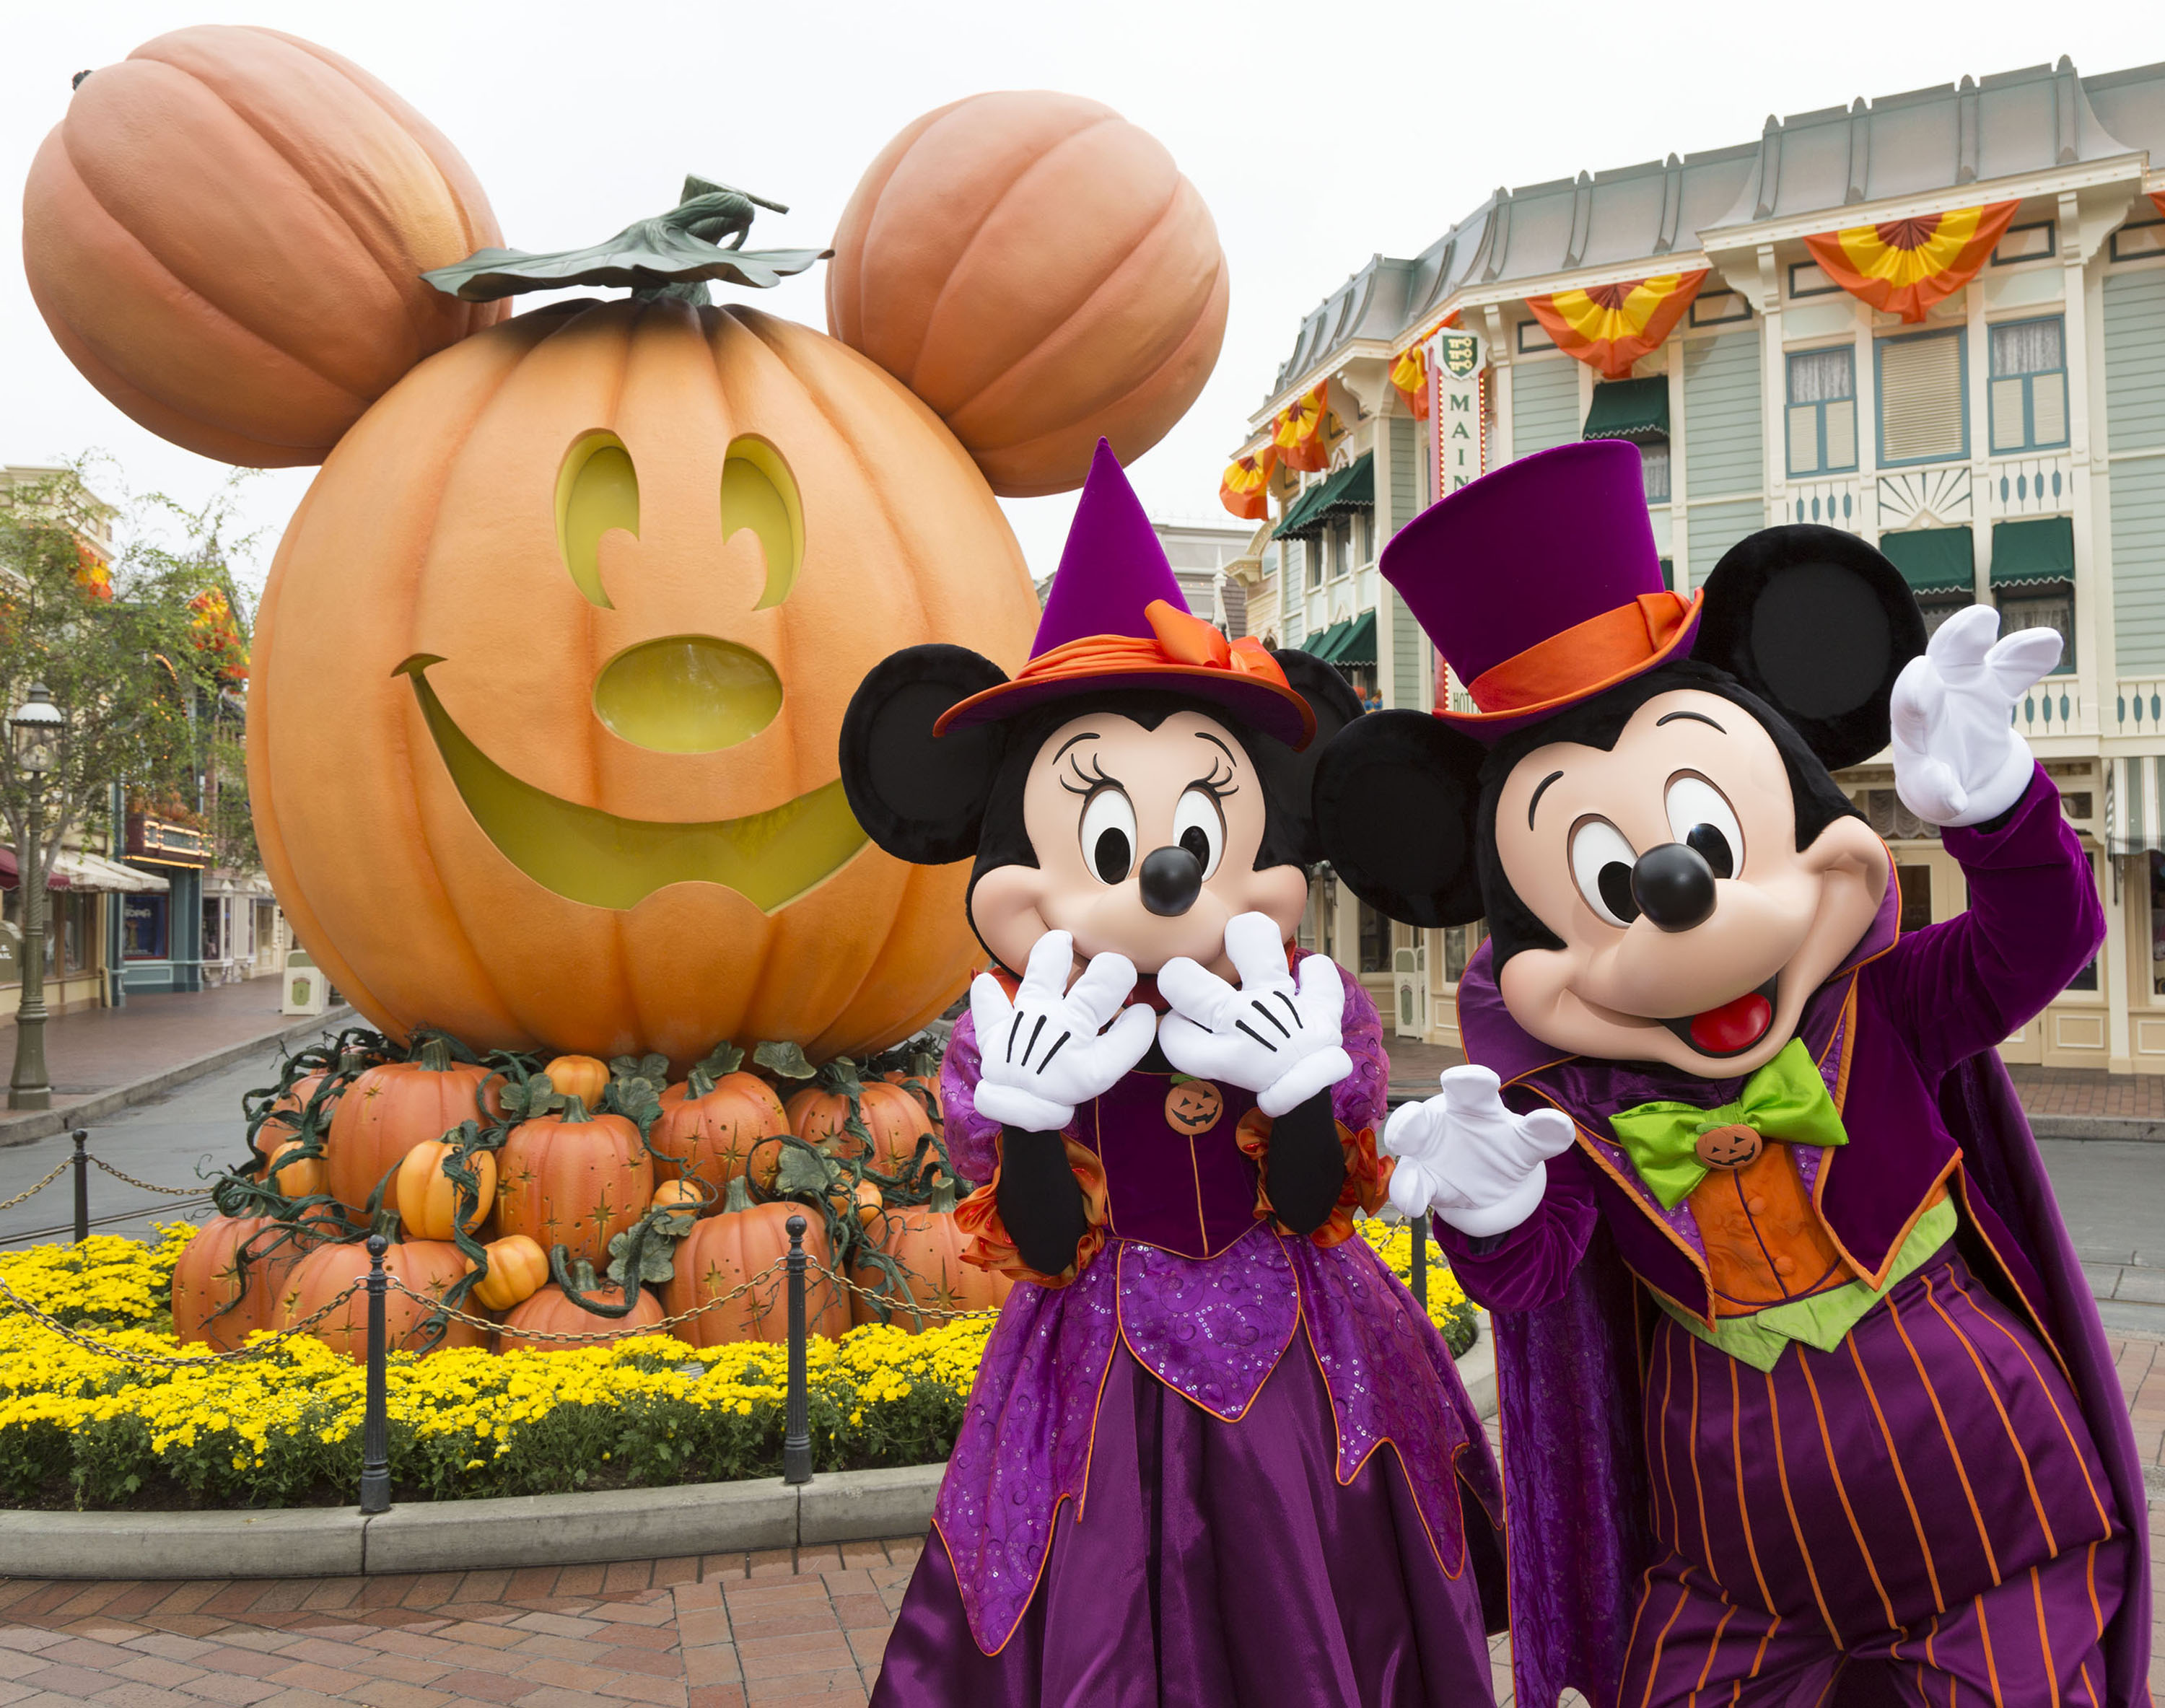 Halloweentime Returns to the Disneyland Resort